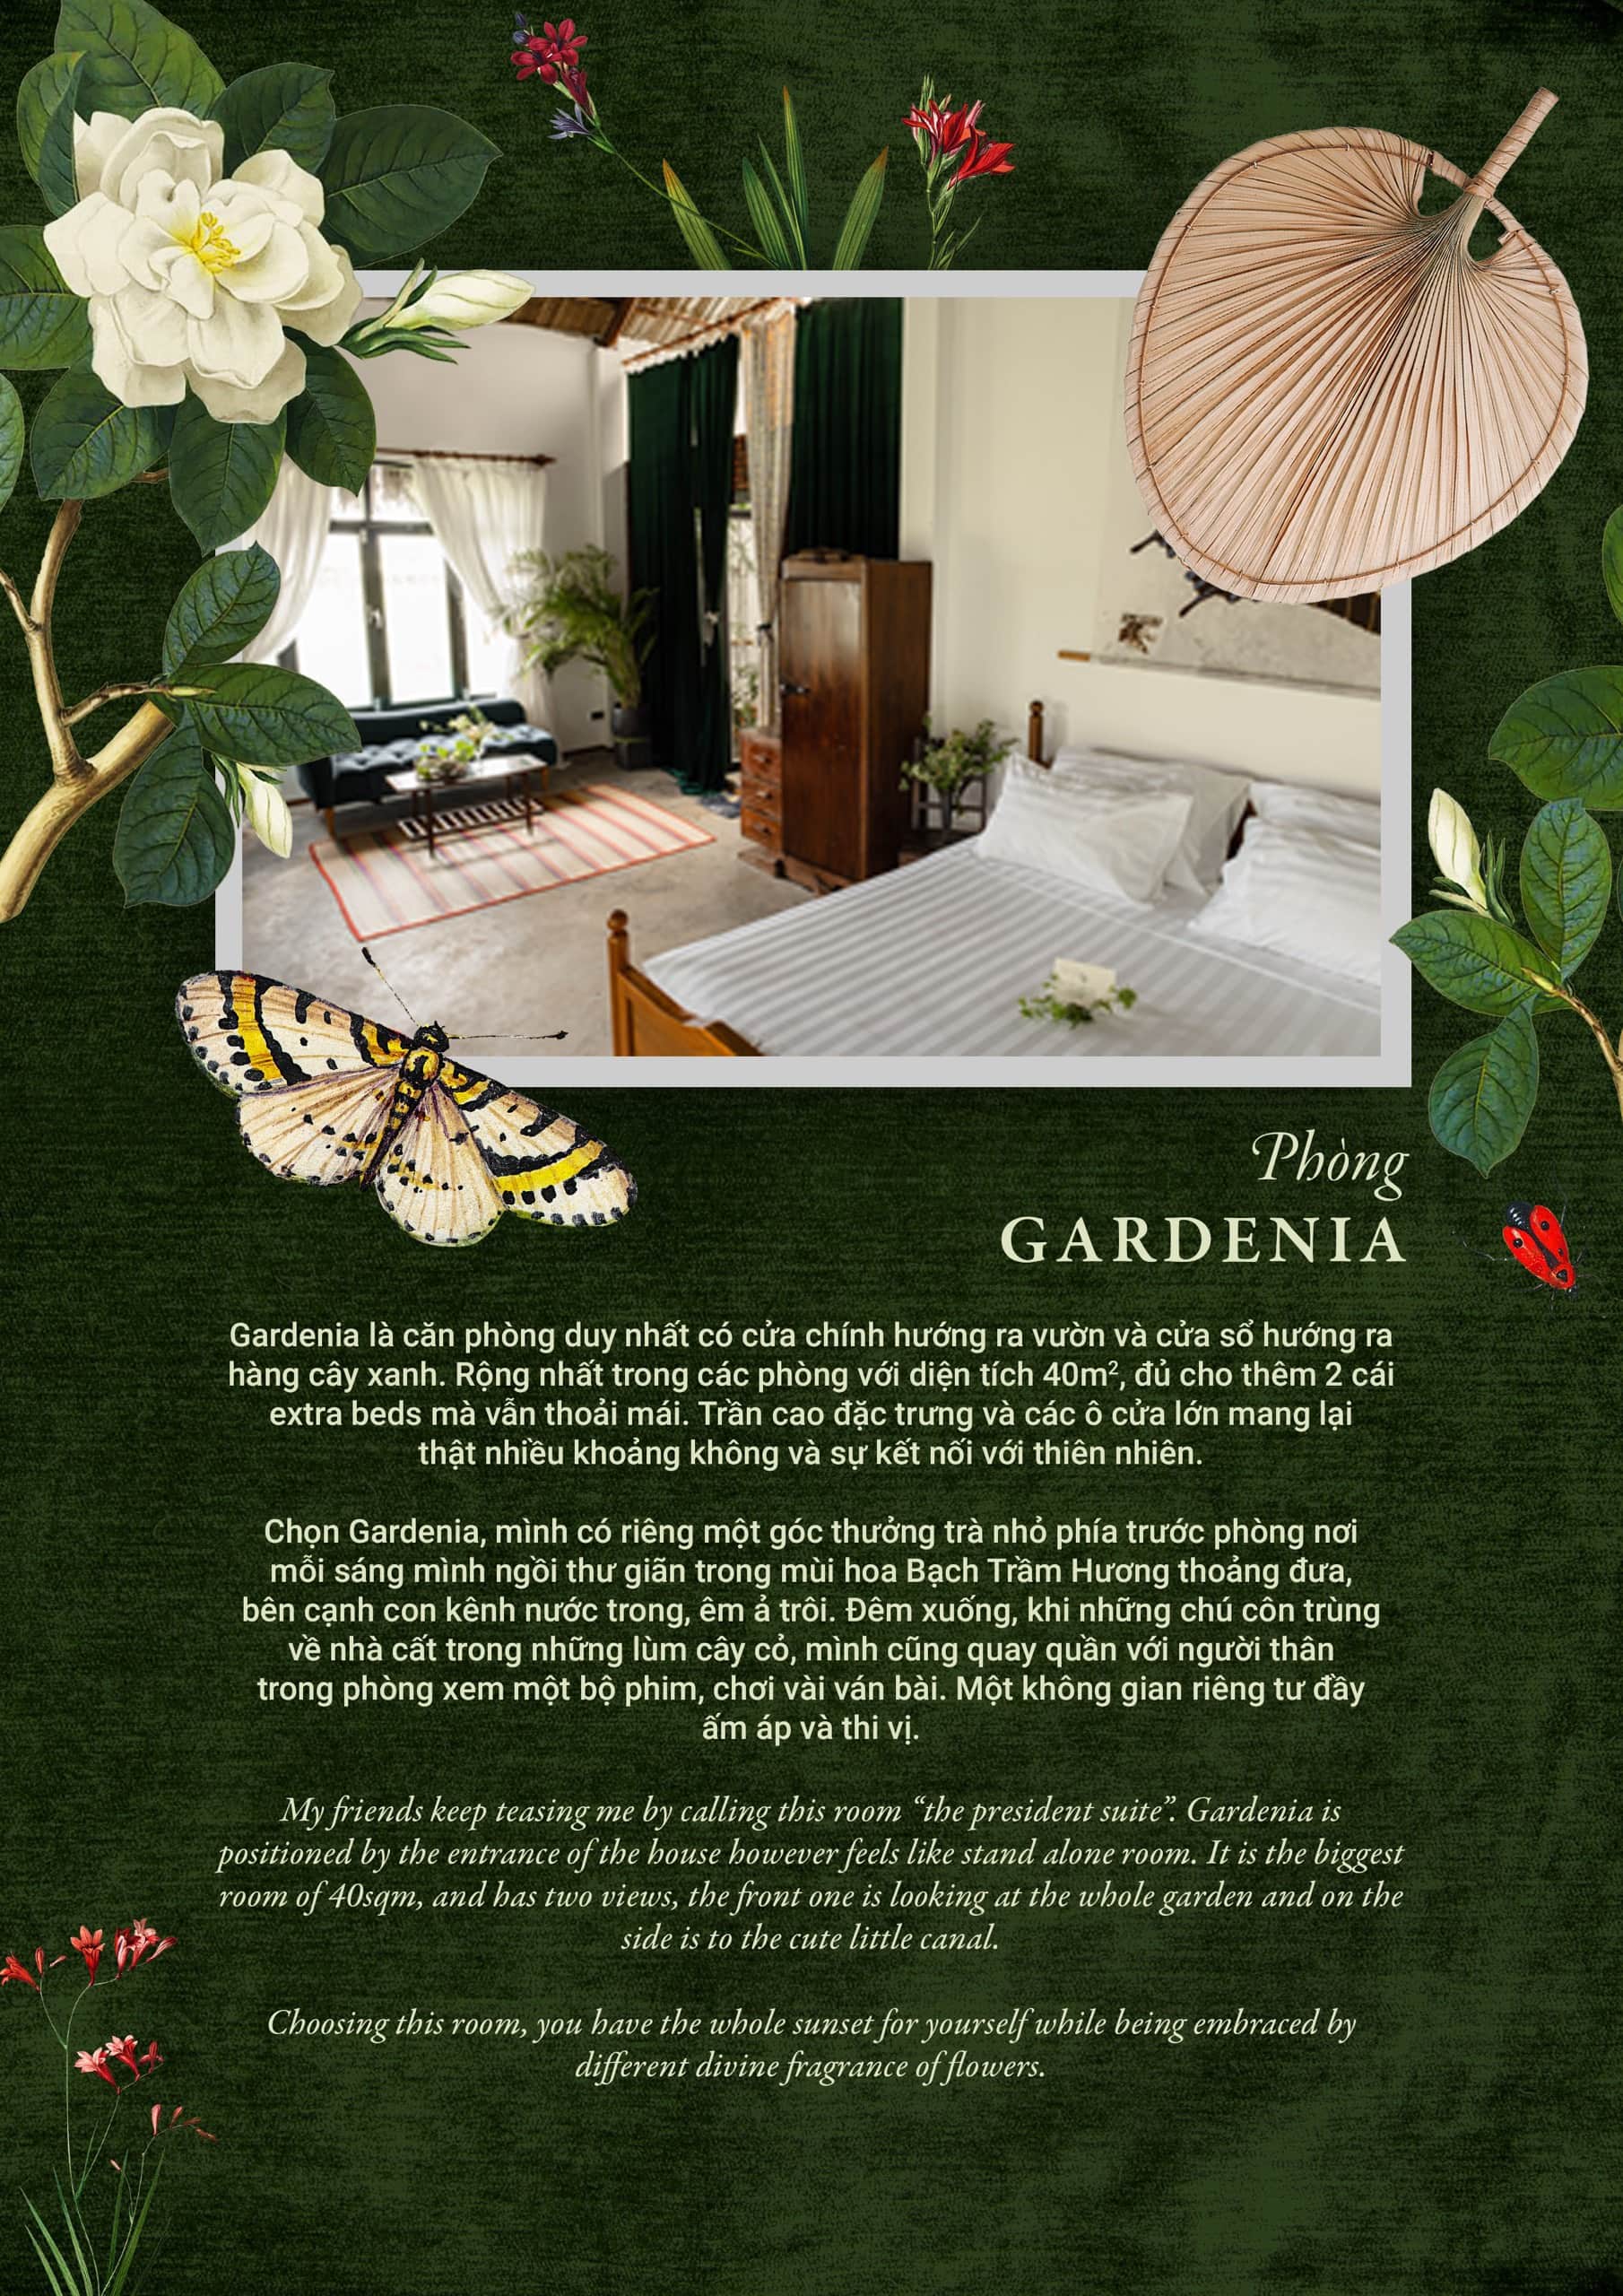 Phòng Gardenia - Padma de Fleur Flowers